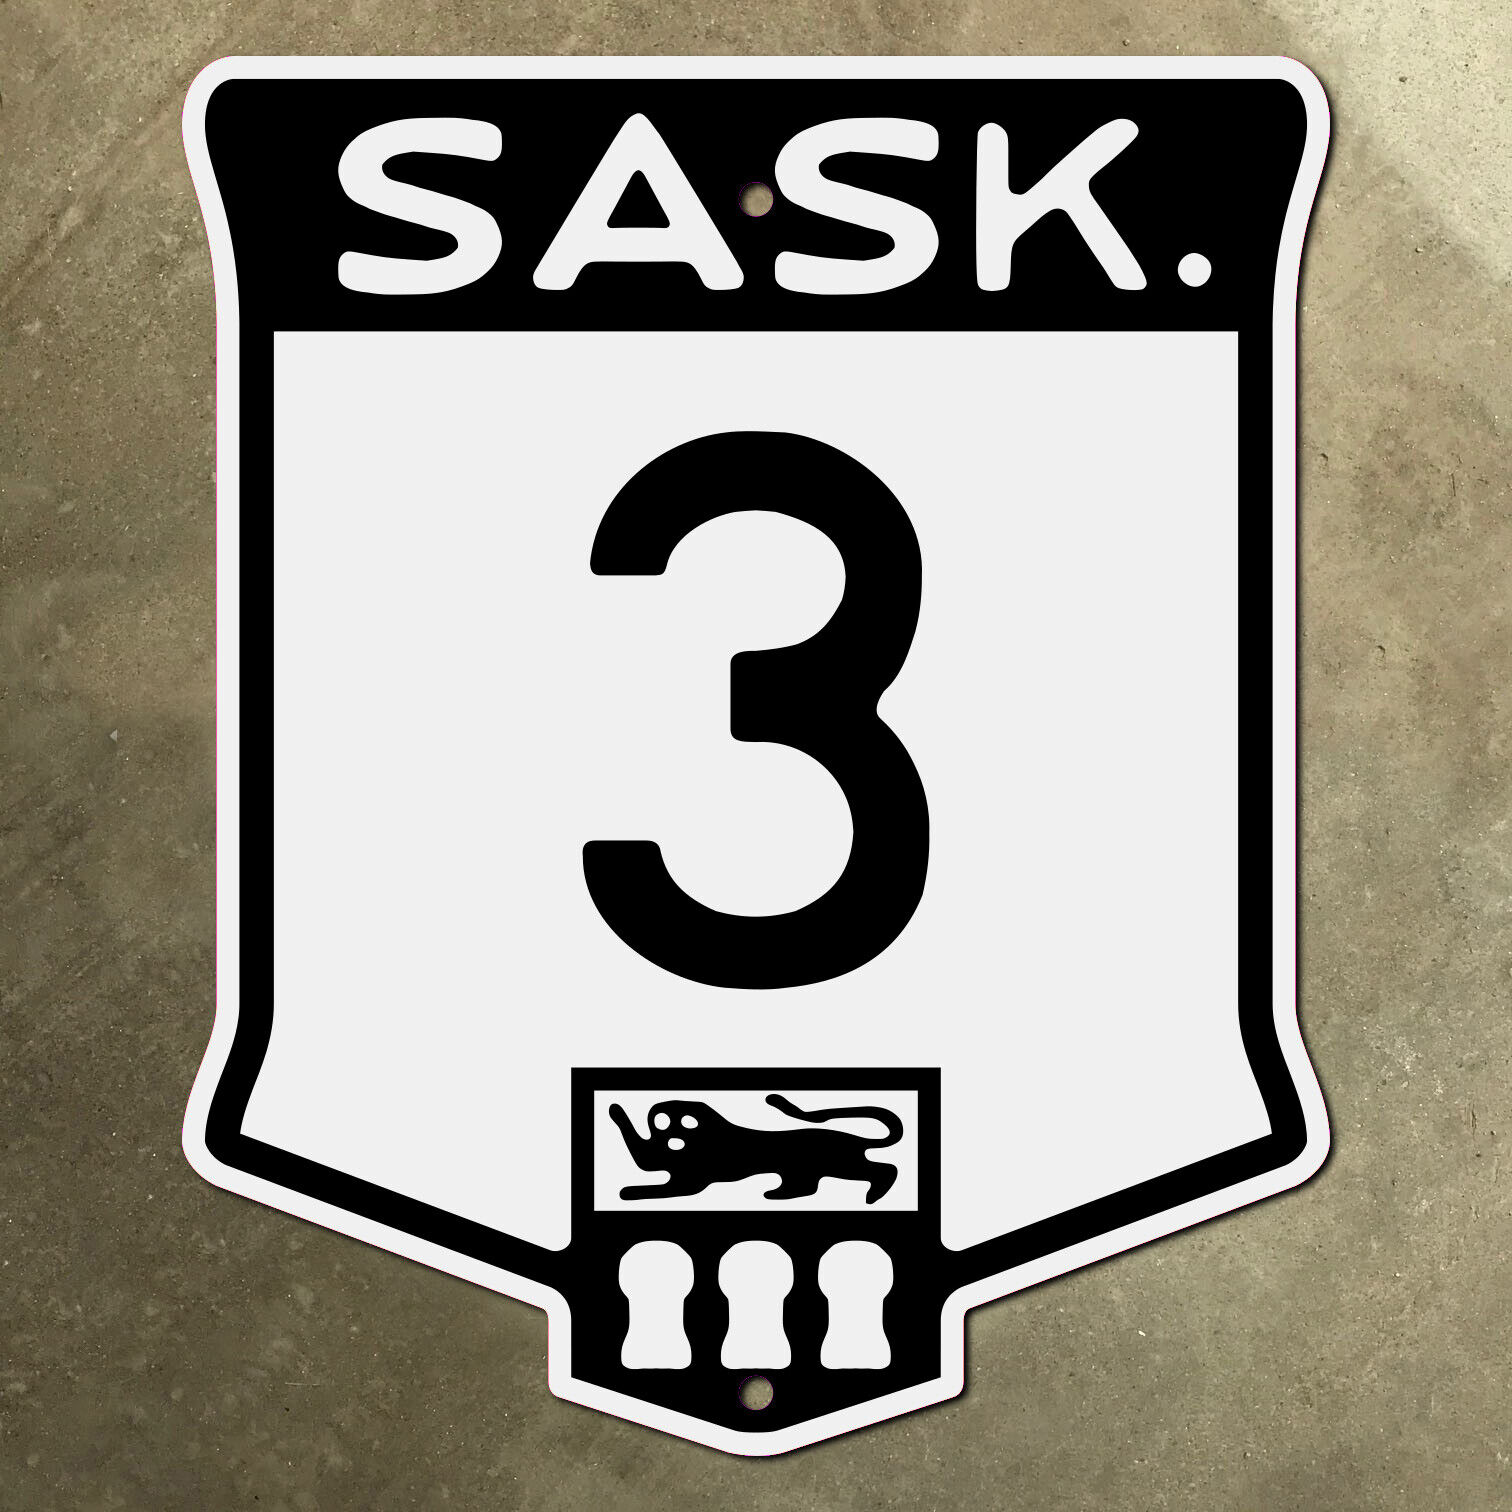 Saskatchewan provincial highway 3 route marker road sign Canada 1950s crest